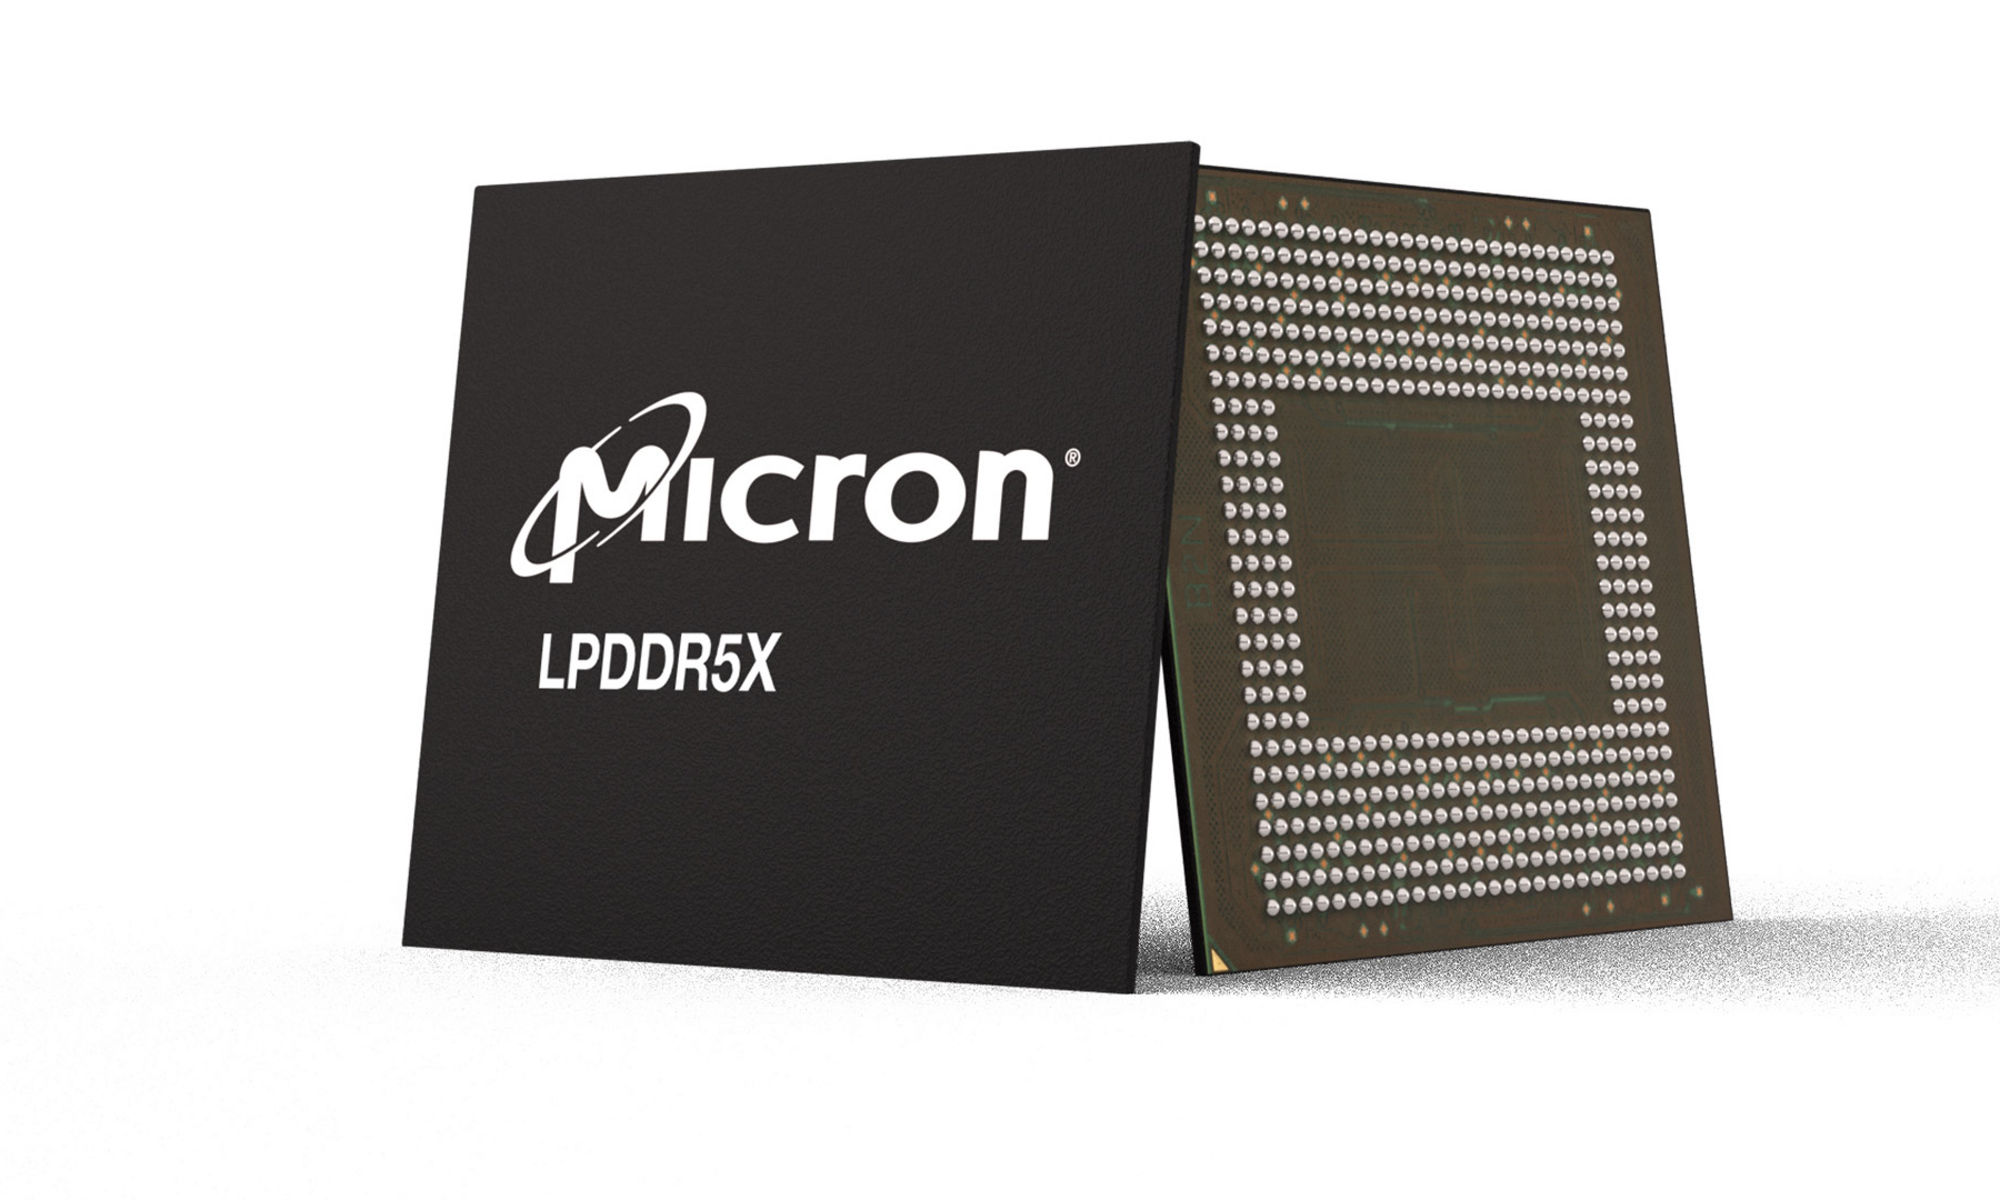 Micron LPDDR5X component